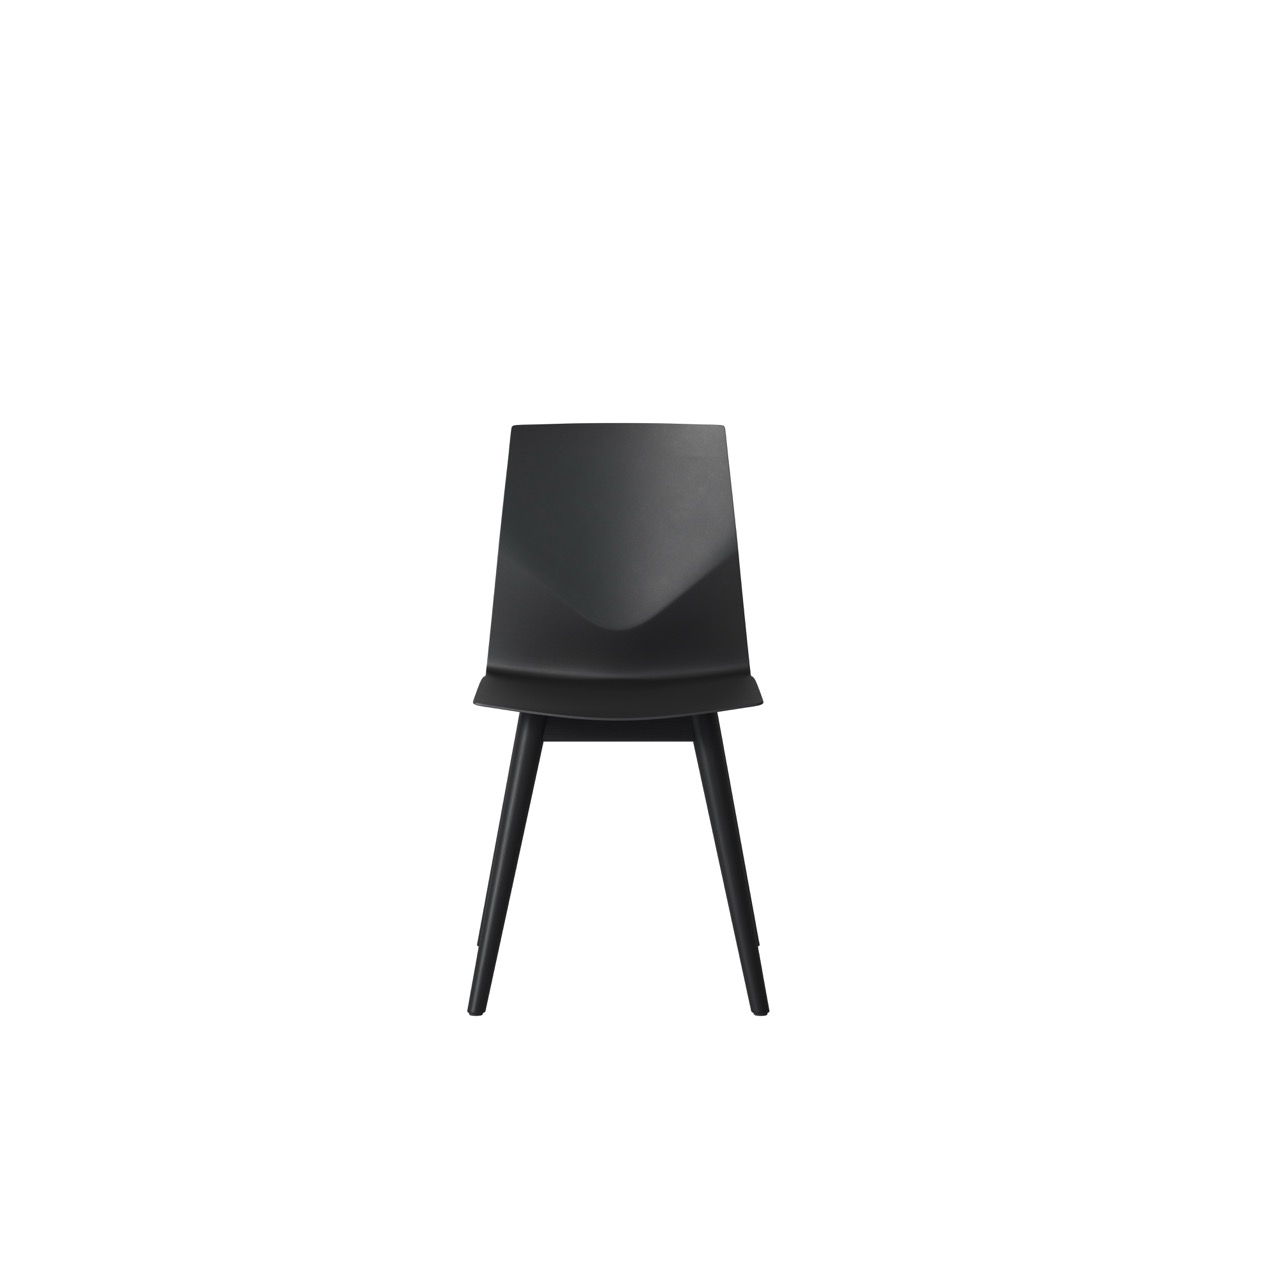 OCEE&FOUR – Chairs – FourCast 2 Four – Plastic shell - Black oak frame - Packshot Image 1 Large